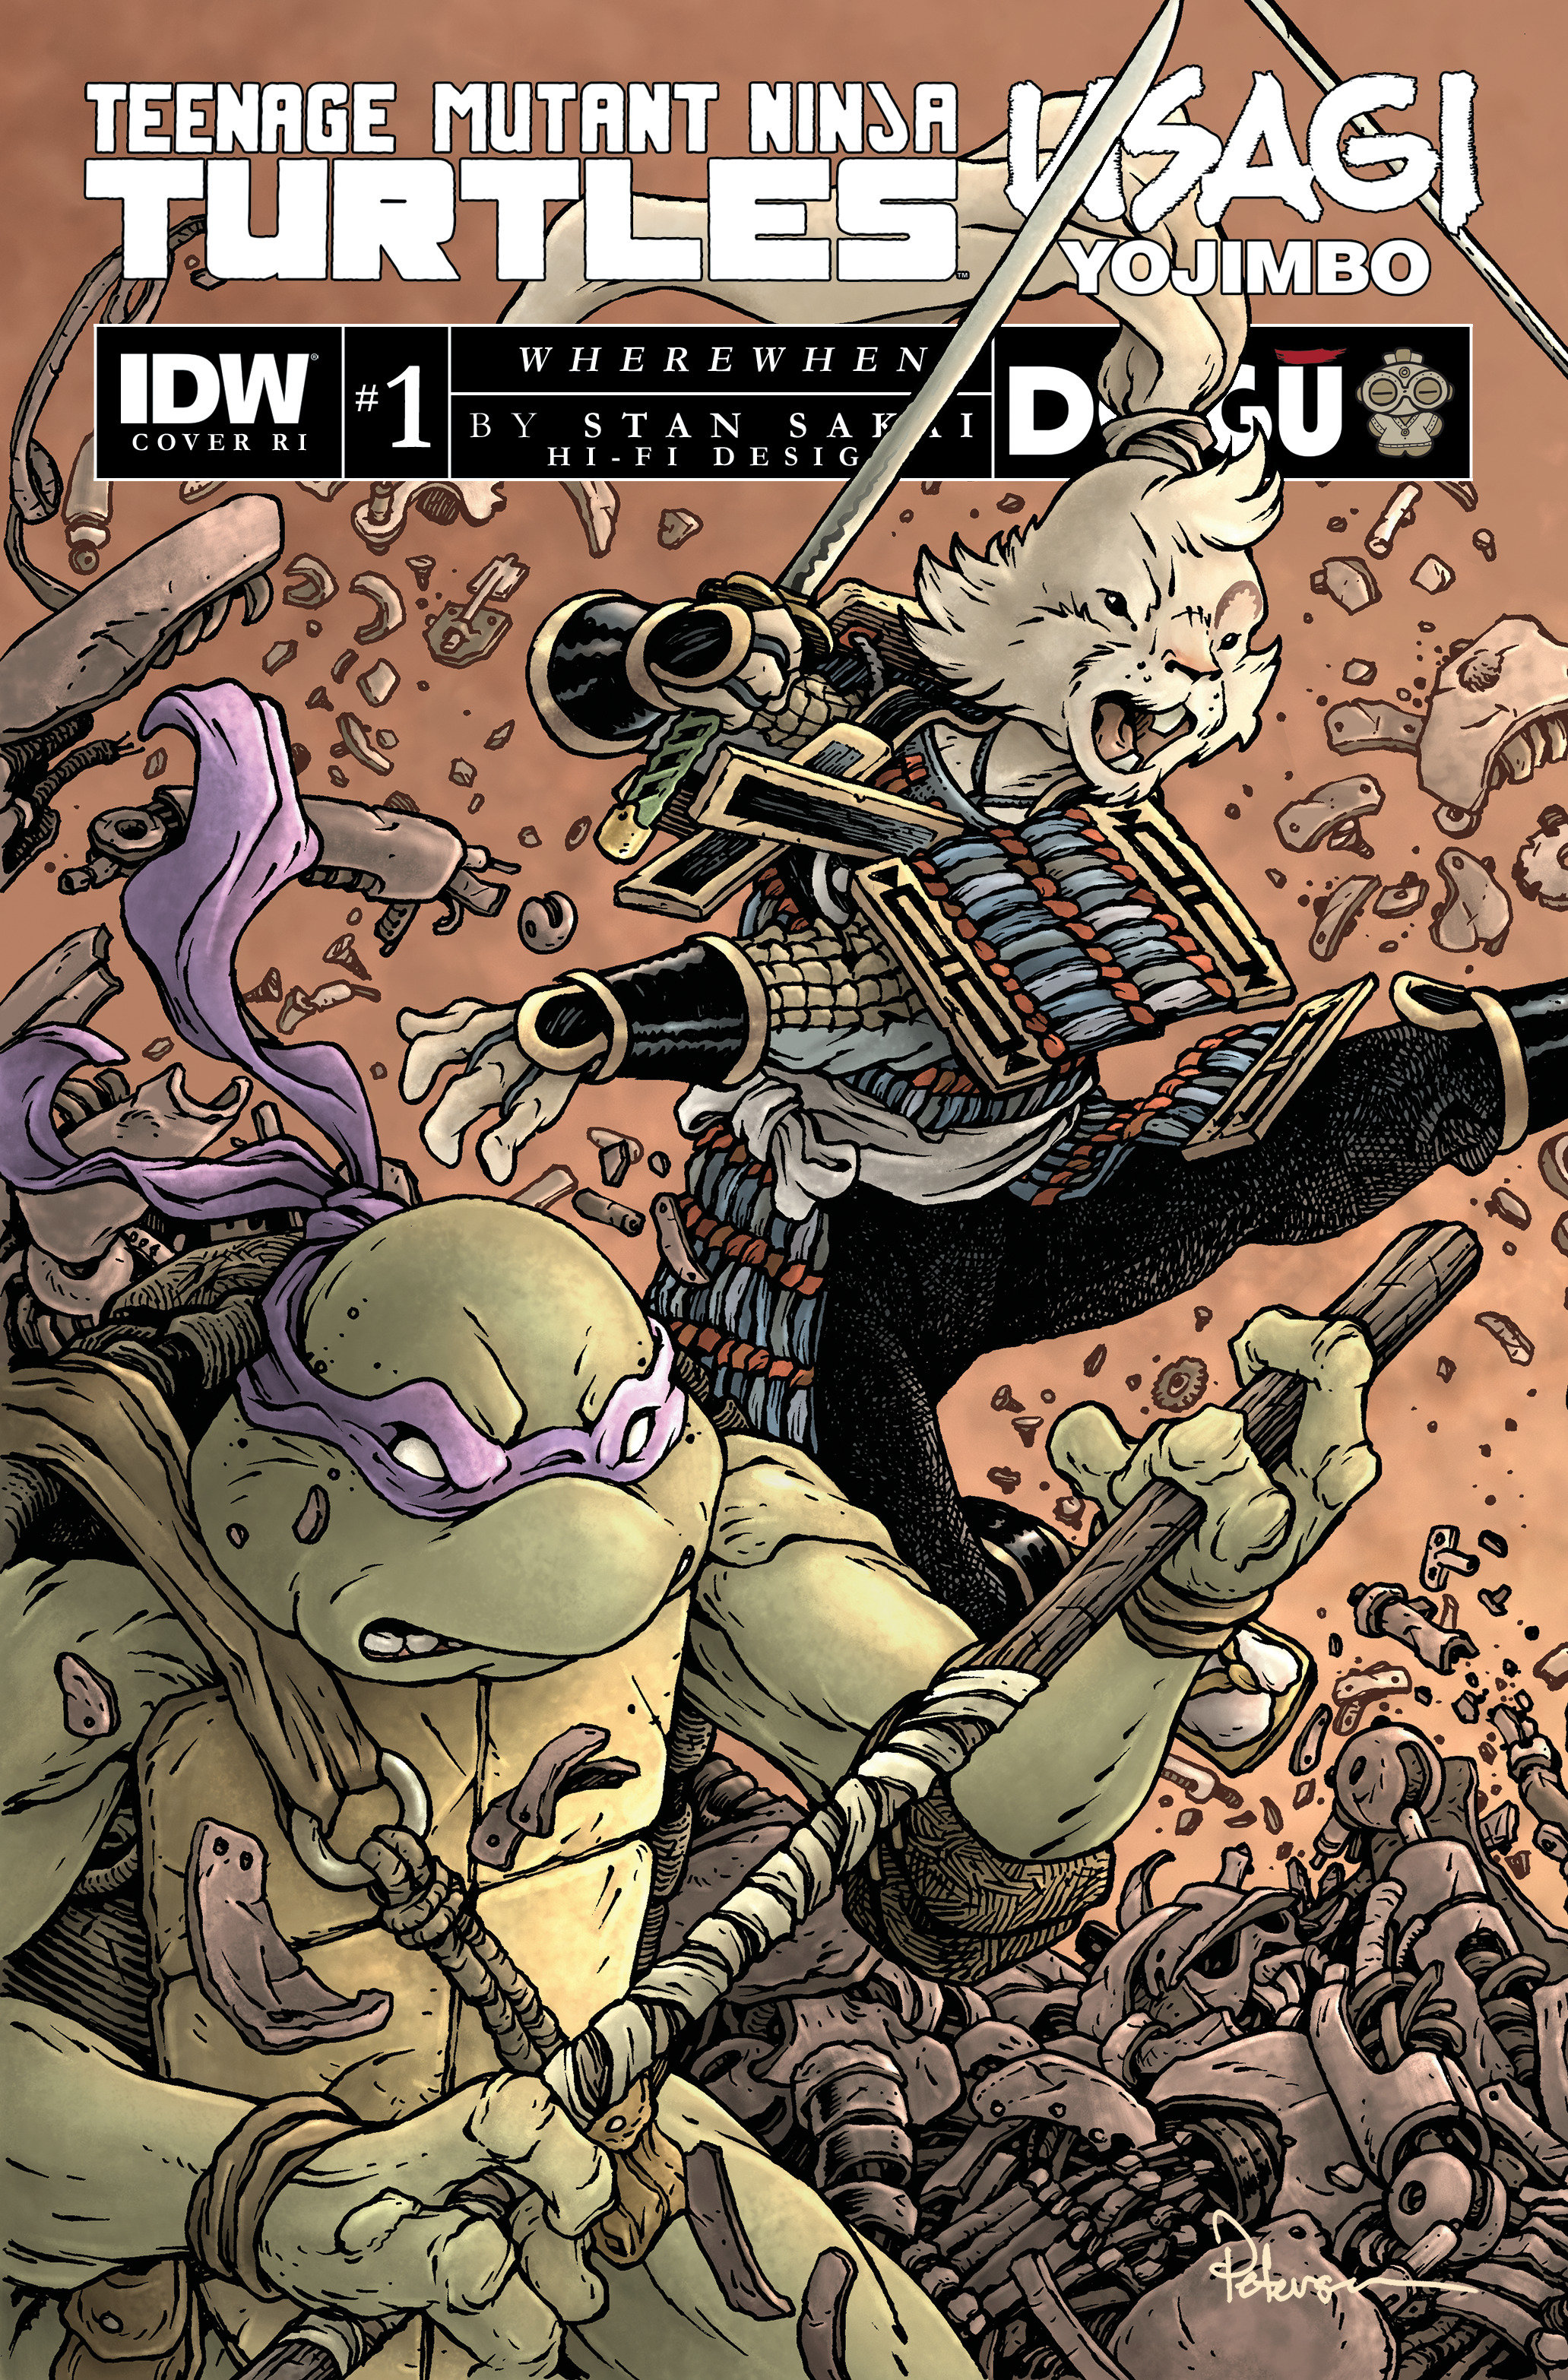 Teenage Mutant Ninja Turtles/Usagi Yojimbo WhereWhen #1 Cover F 1 for 50 Incentive Petersen